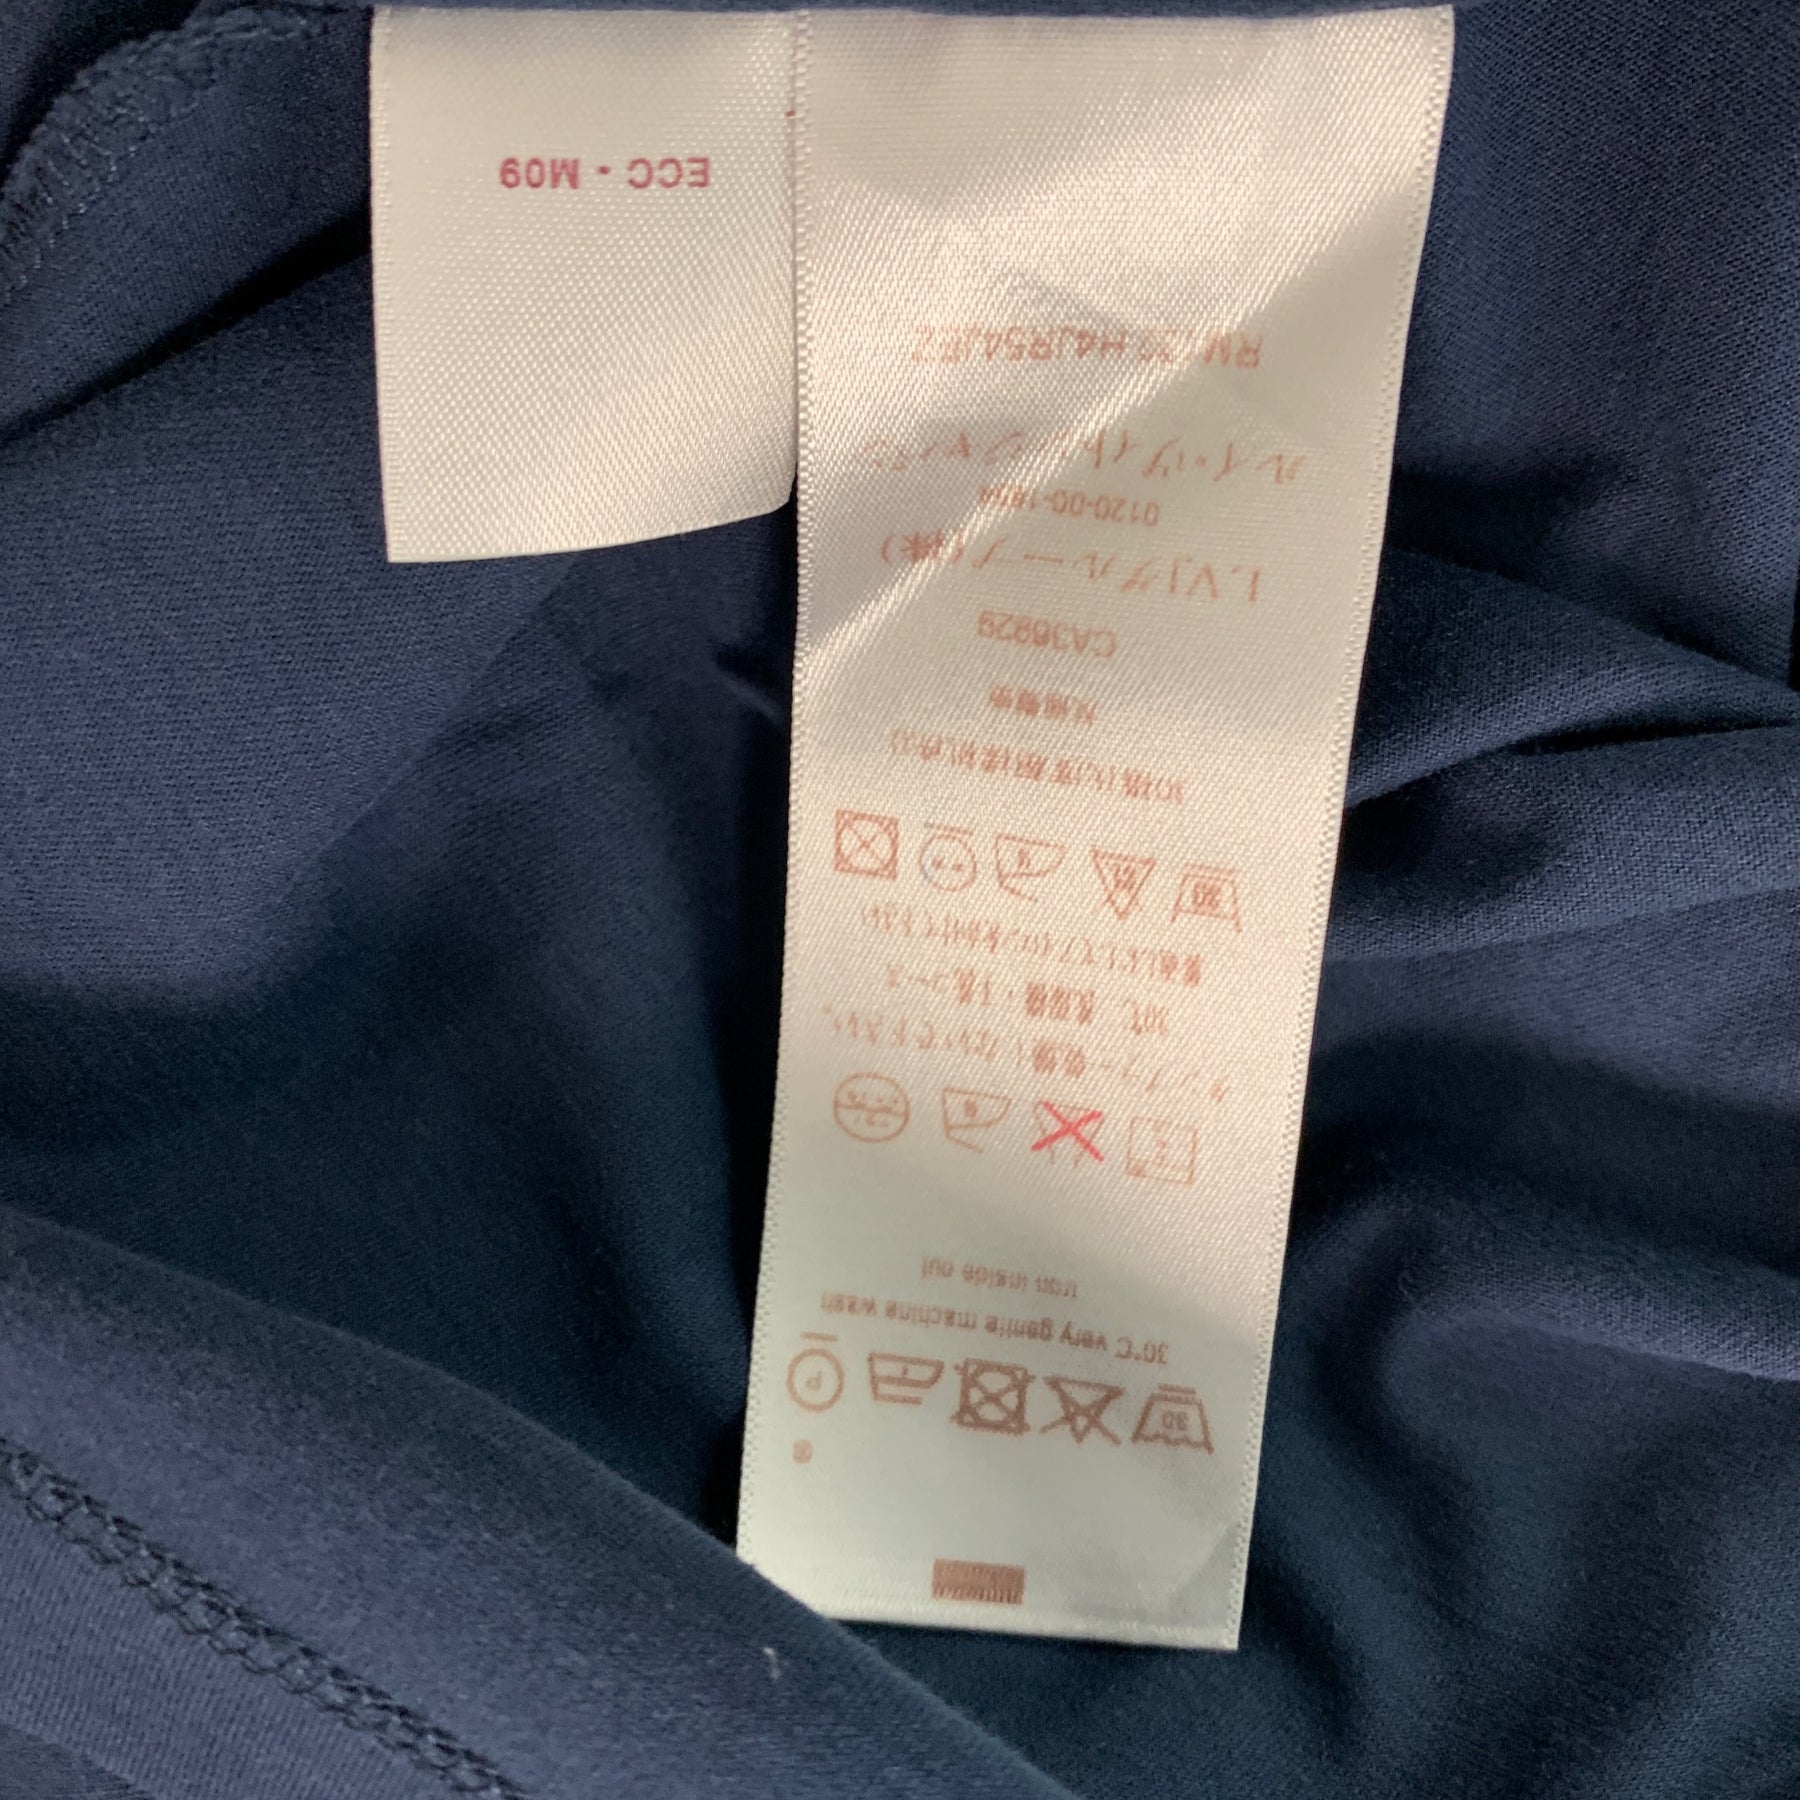 Louis Vuitton Embroidered Logo Shirt in Light Blue Cotton ref